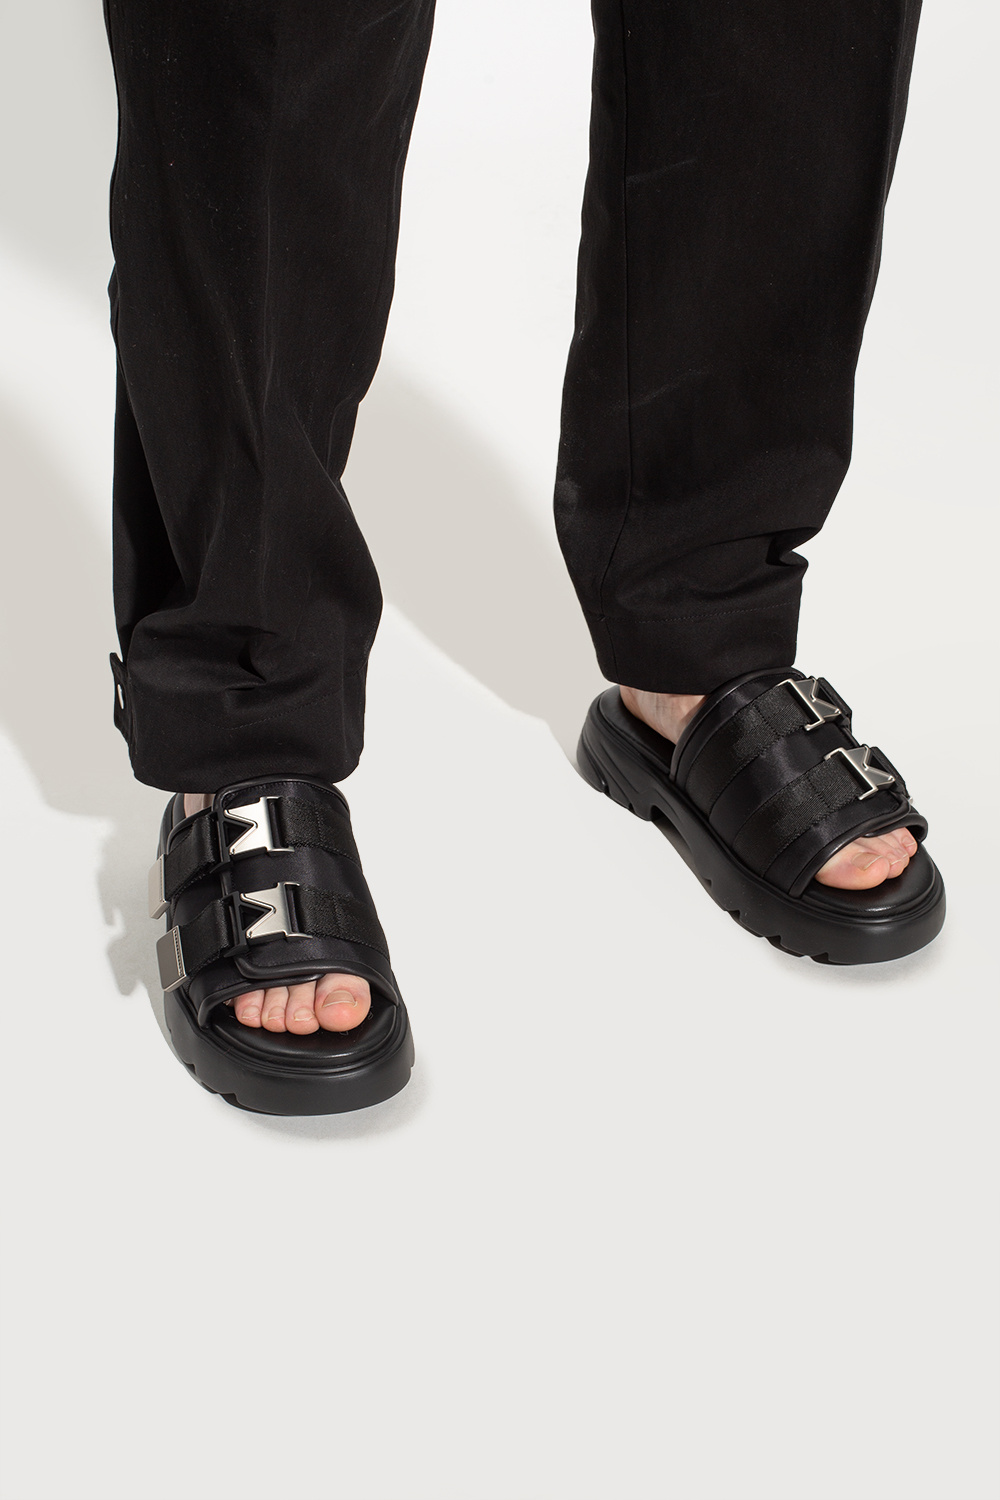 Bottega Veneta ‘Flash’ slides | Men's Shoes | Vitkac